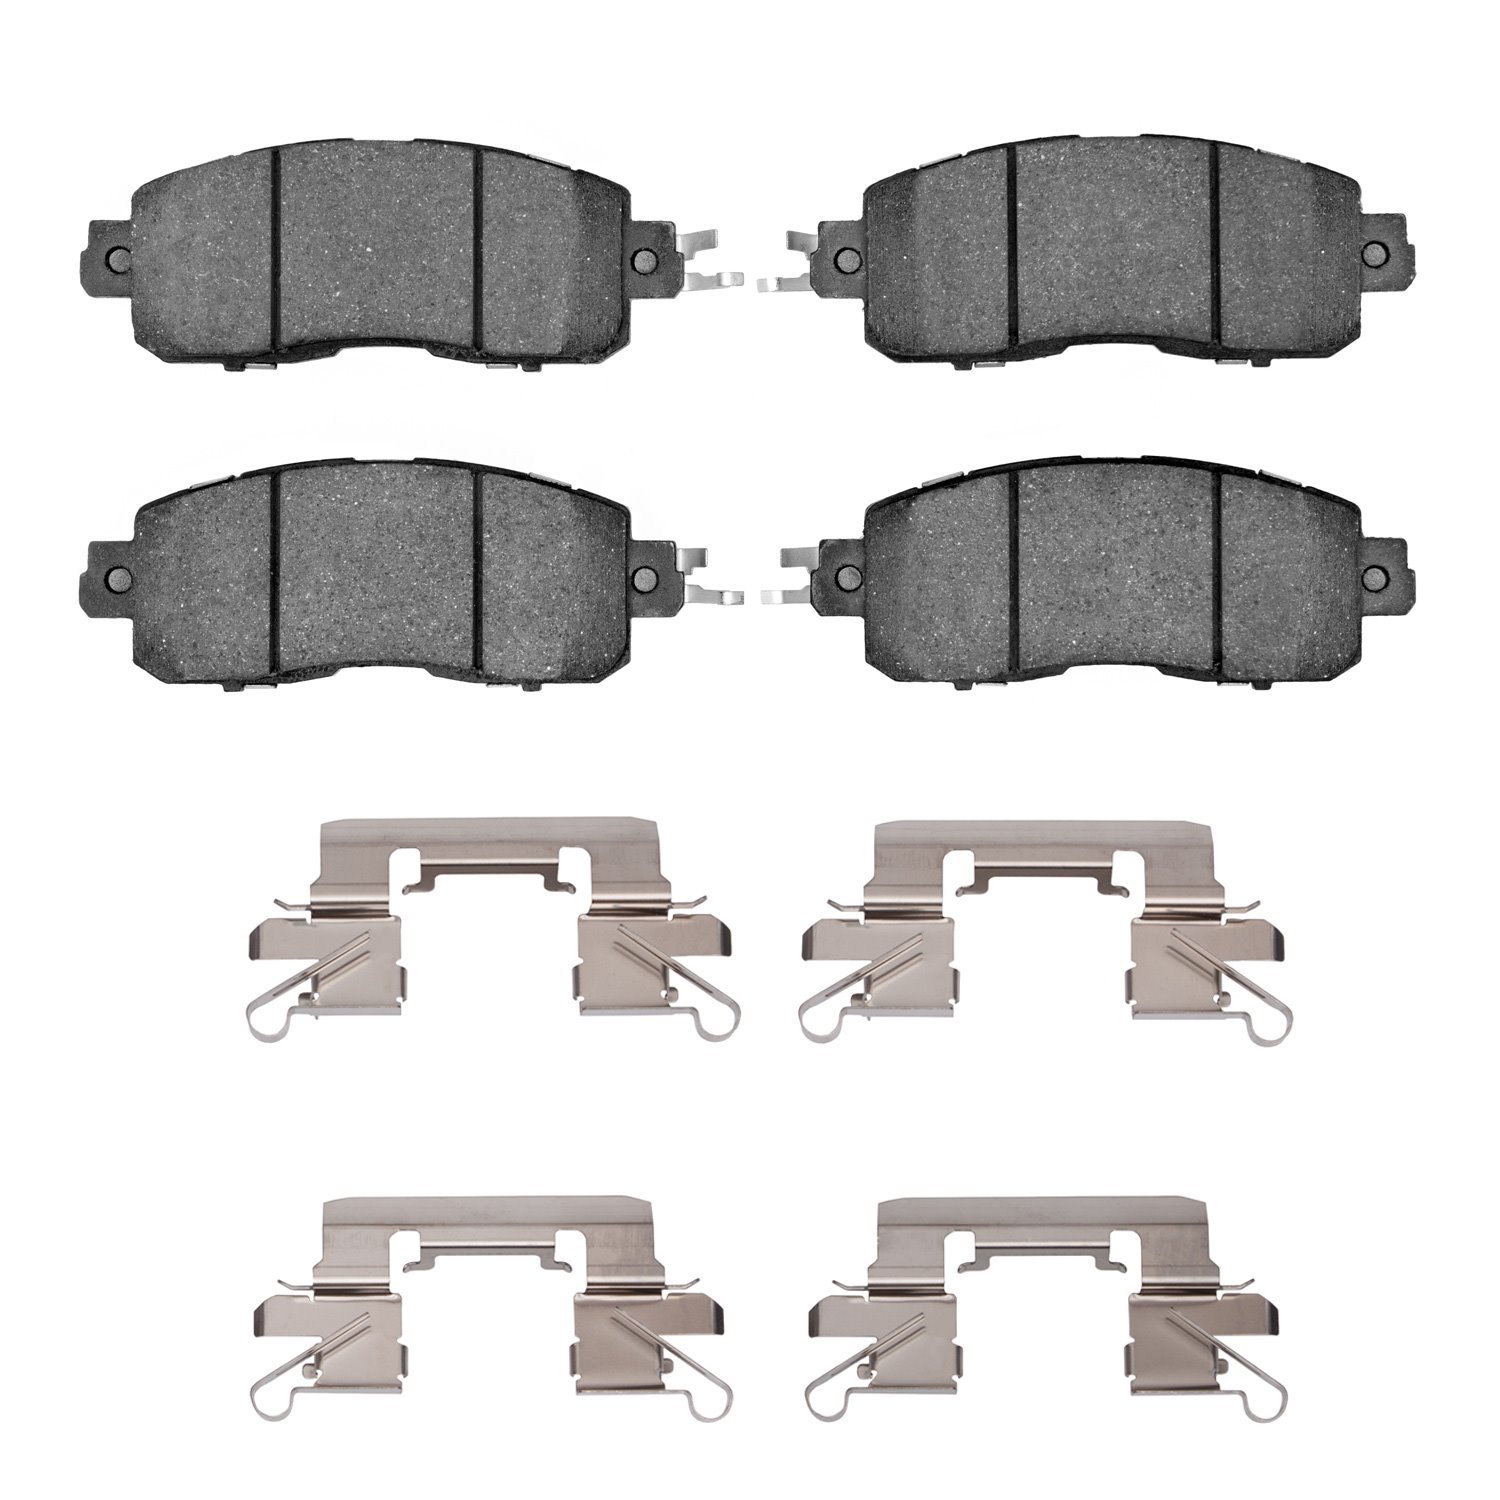 1551-1650-01 5000 Advanced Ceramic Brake Pads & Hardware Kit, Fits Select Infiniti/Nissan, Position: Front